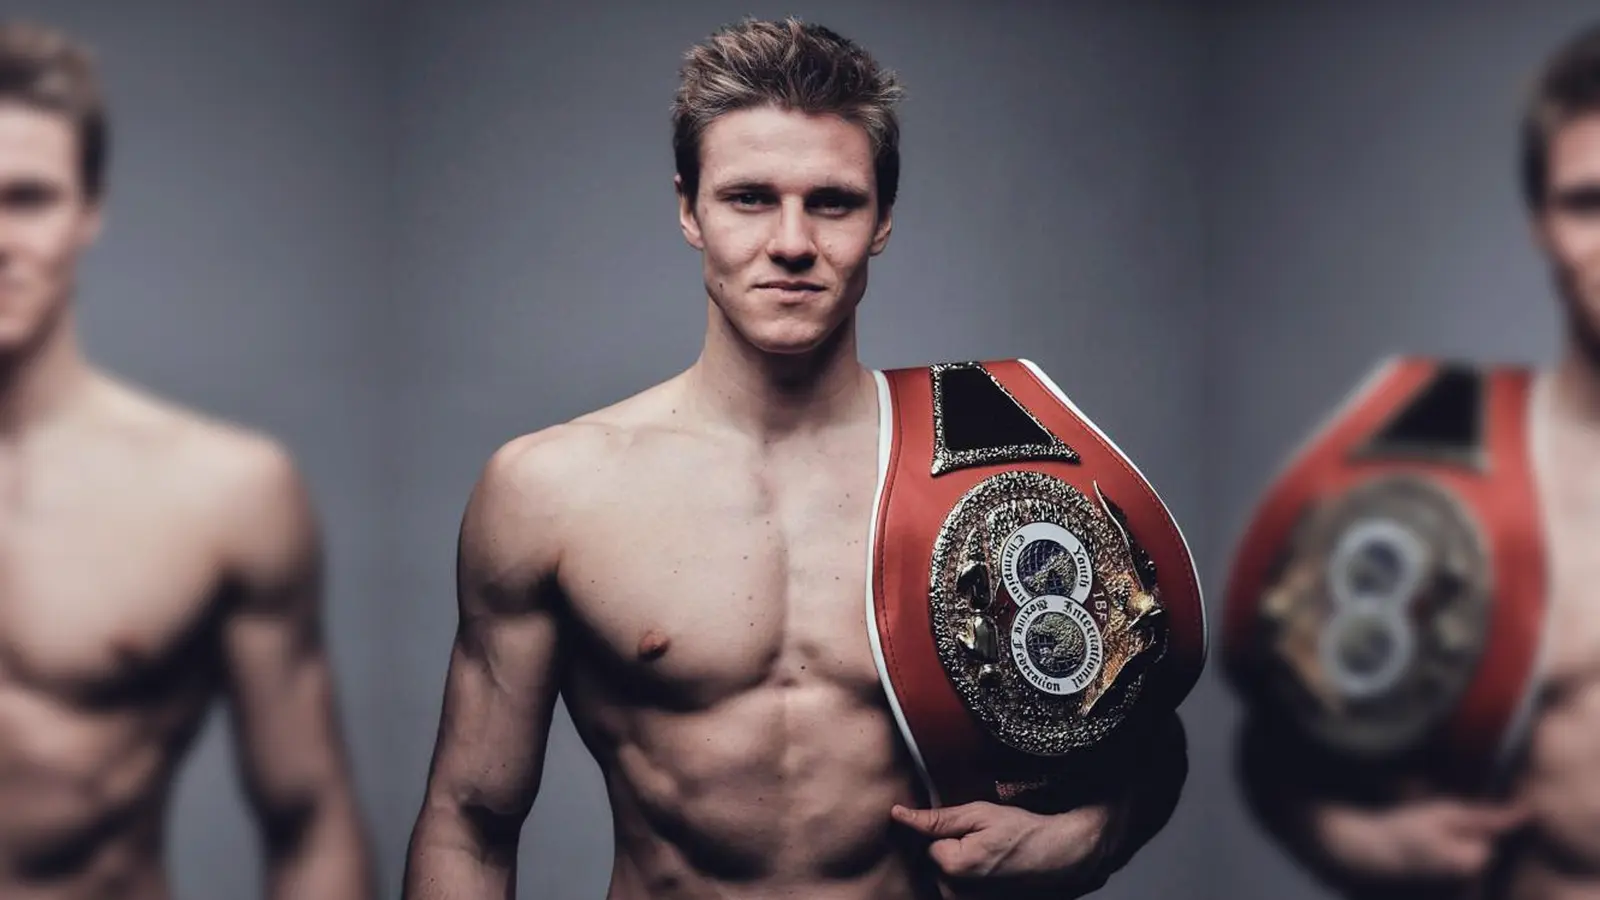 Simon boxt erstmals als Juniorenweltmeister "dahoam" in Erding. (Foto: Torsten Helmke)